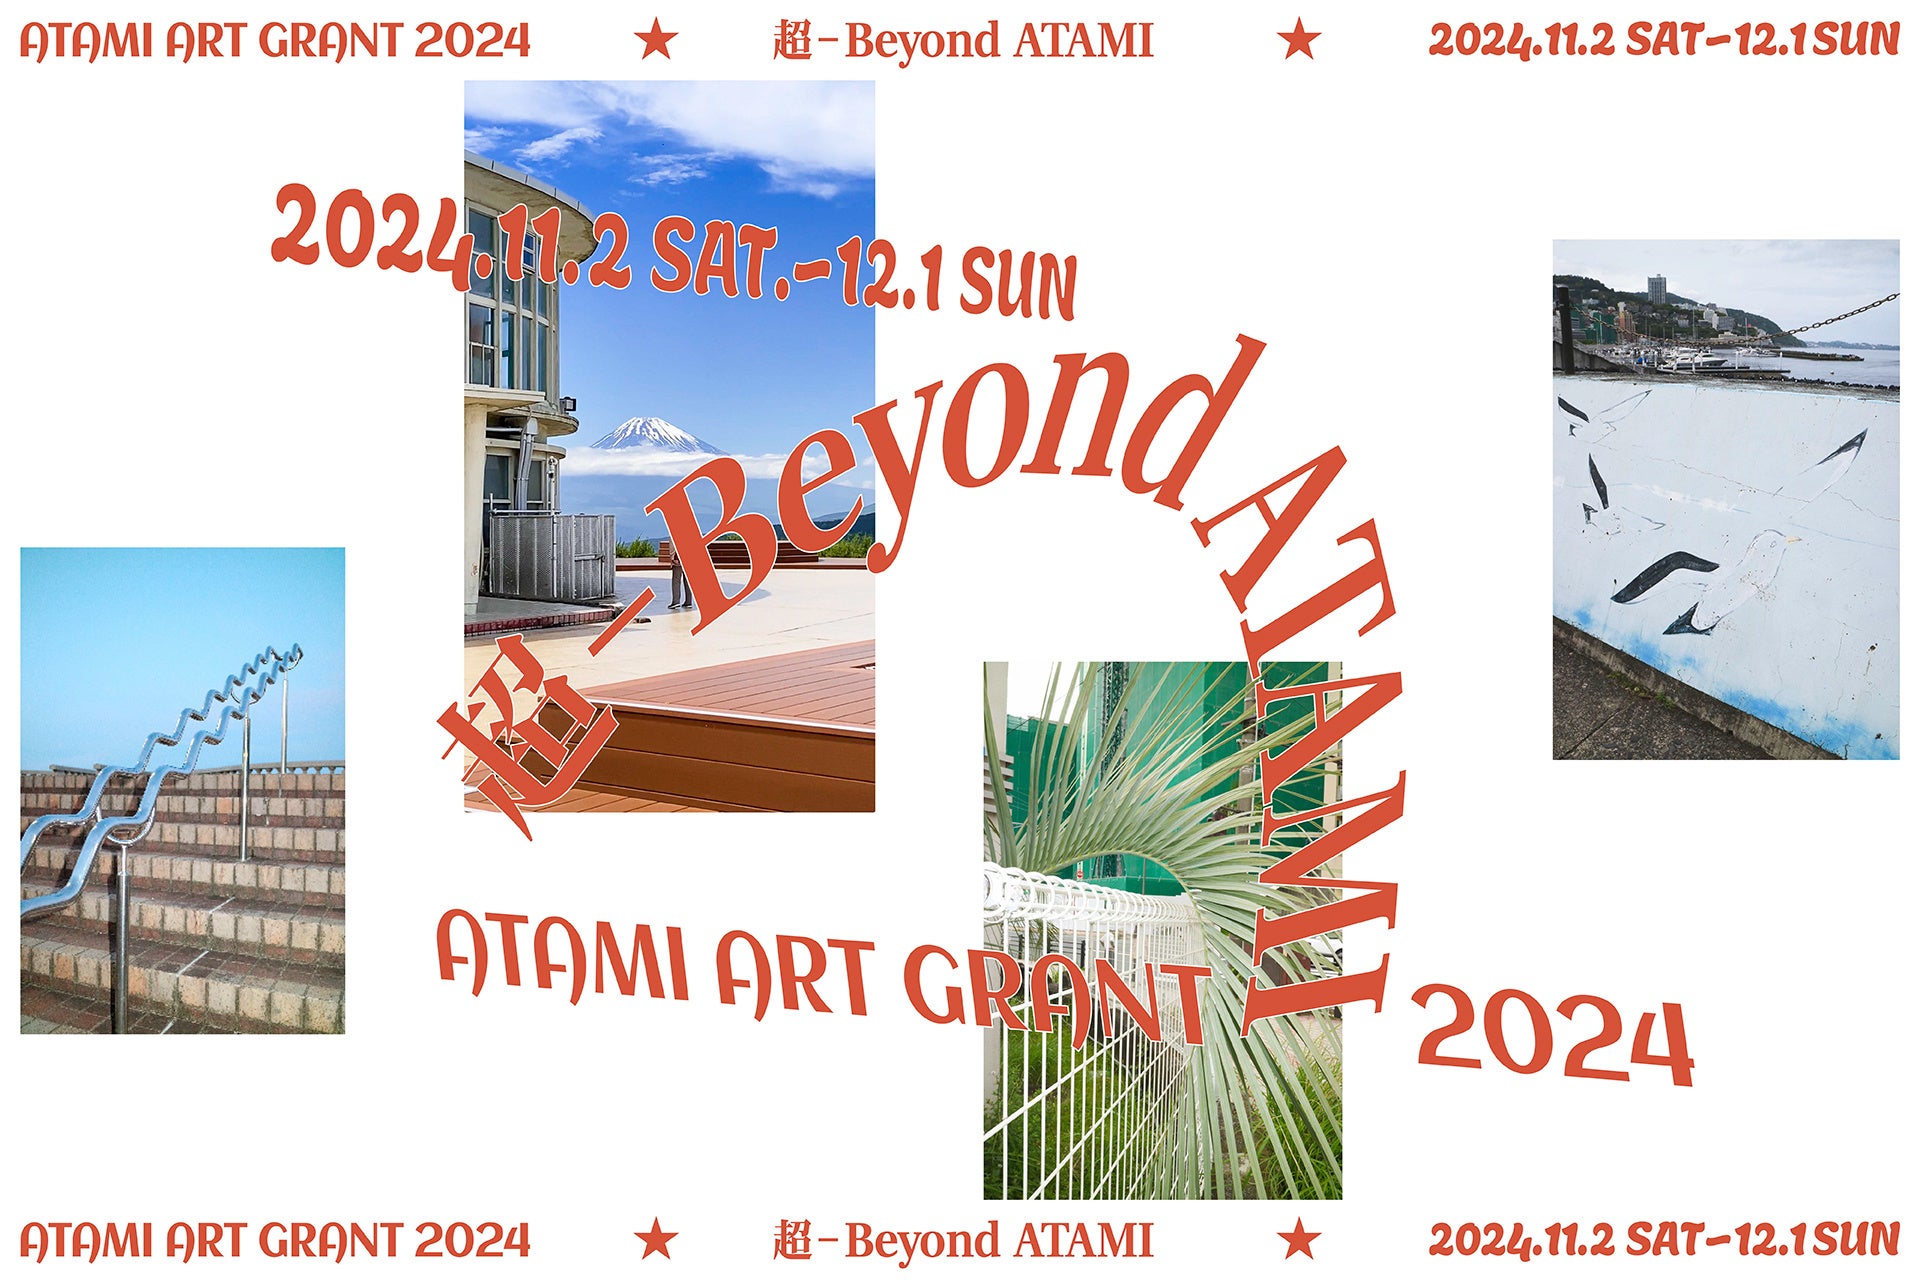 「ATAMI ART GRANT 2024」GRANT授与作家20組決定、2024年メインビジュアル公開のお知らせ